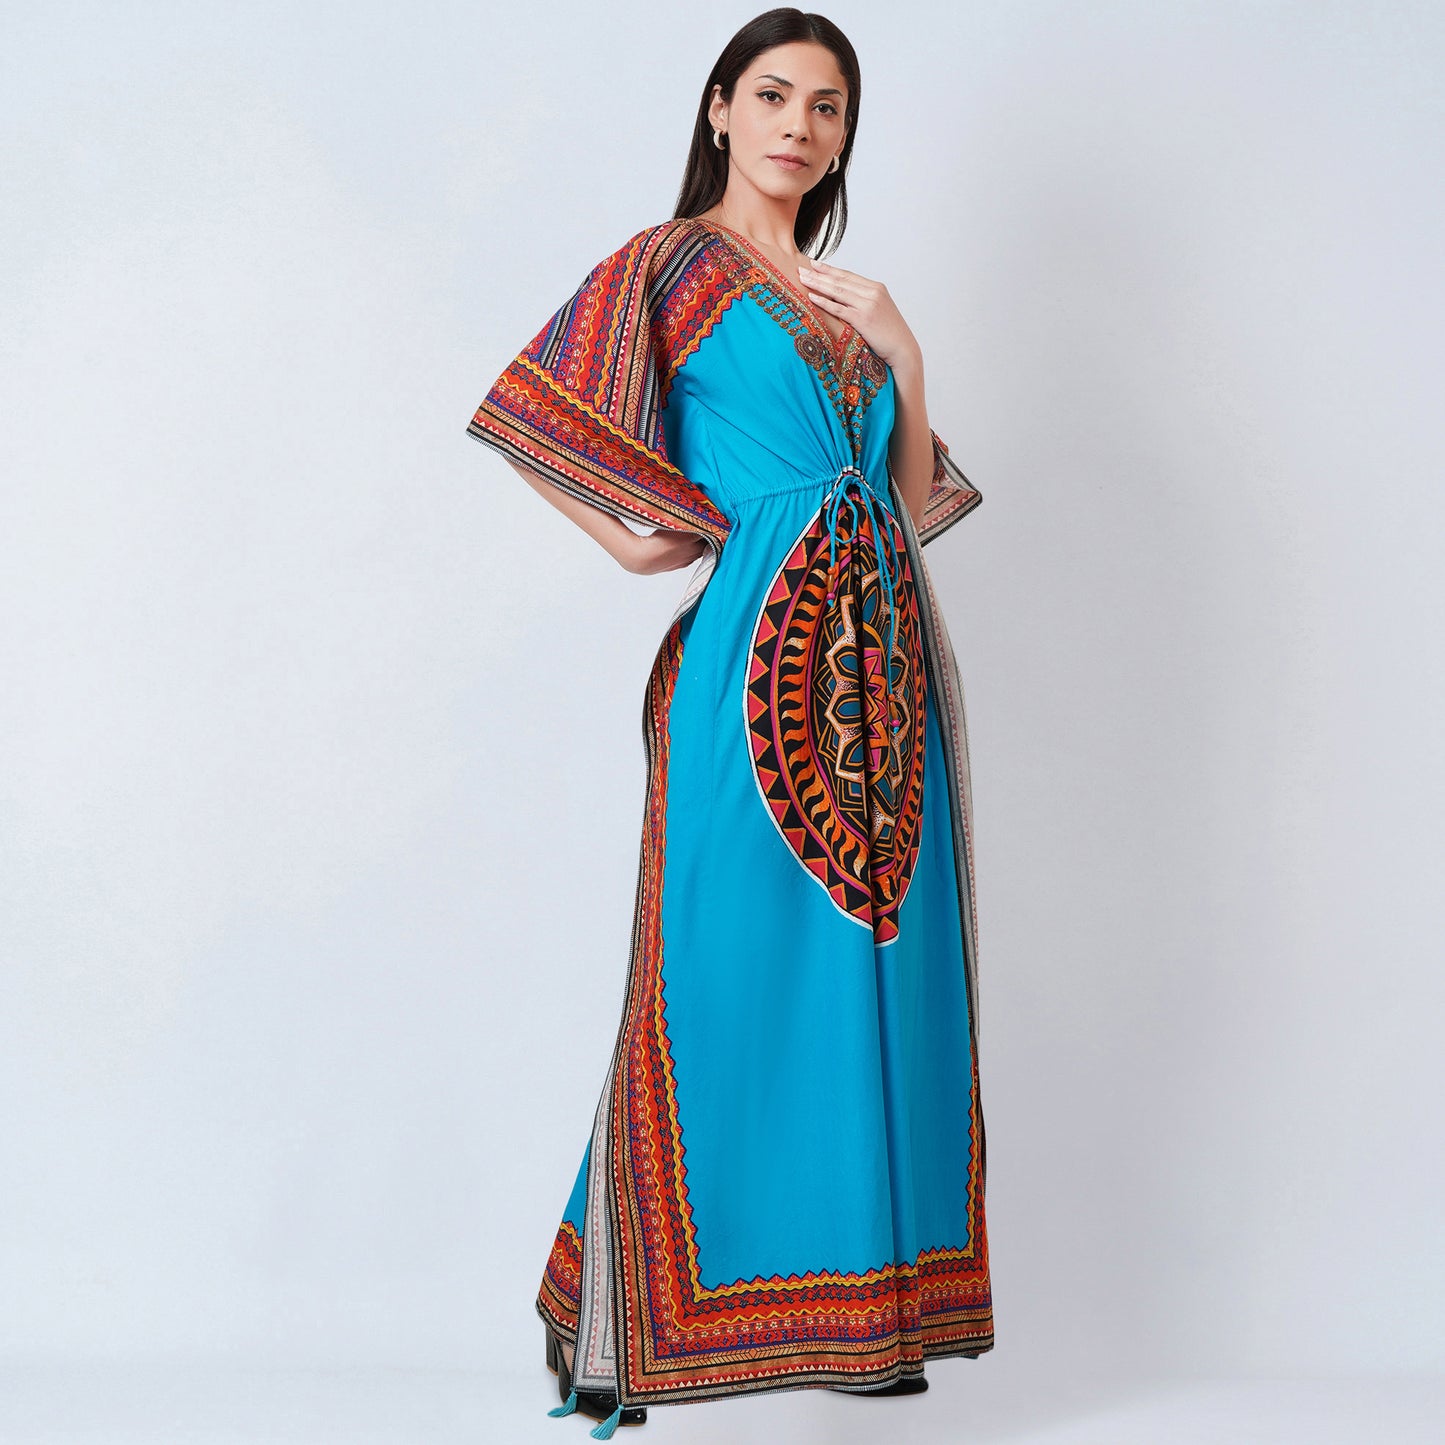 Blue Tribal Embellished Full Length Kaftan